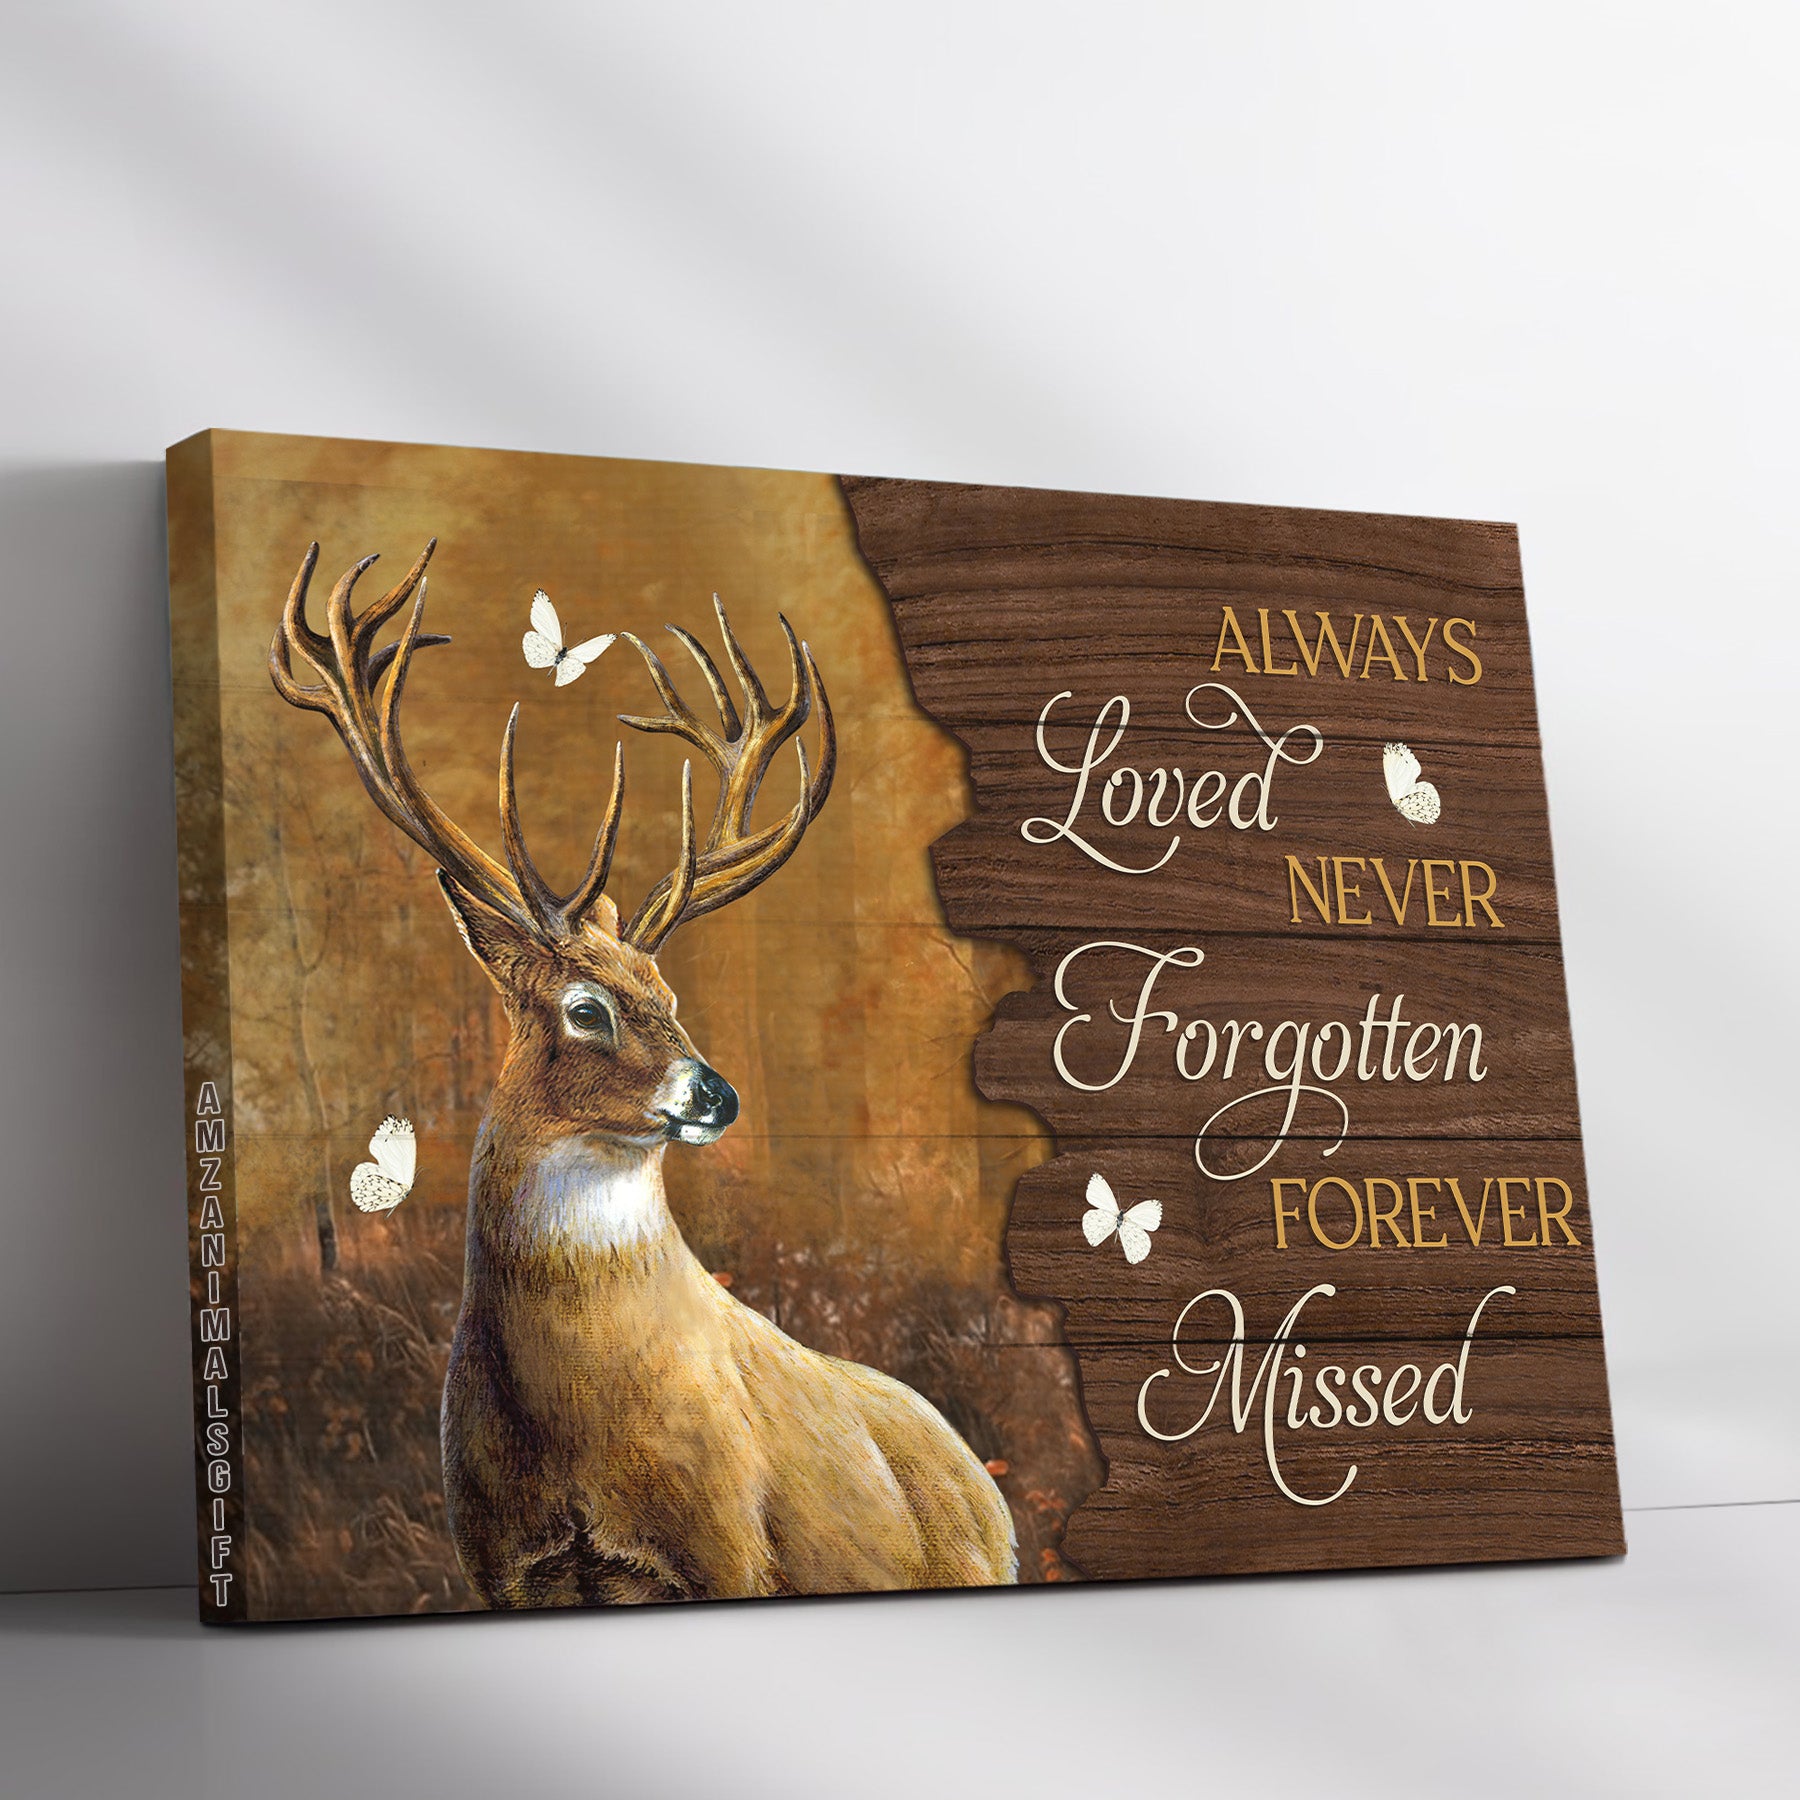 Memorial Premium Wrapped Landscape Canvas - Big Deer, Butterfly, Dark Forest, Always Loved Never Forgotten Forever Missed - Gift For Members Family